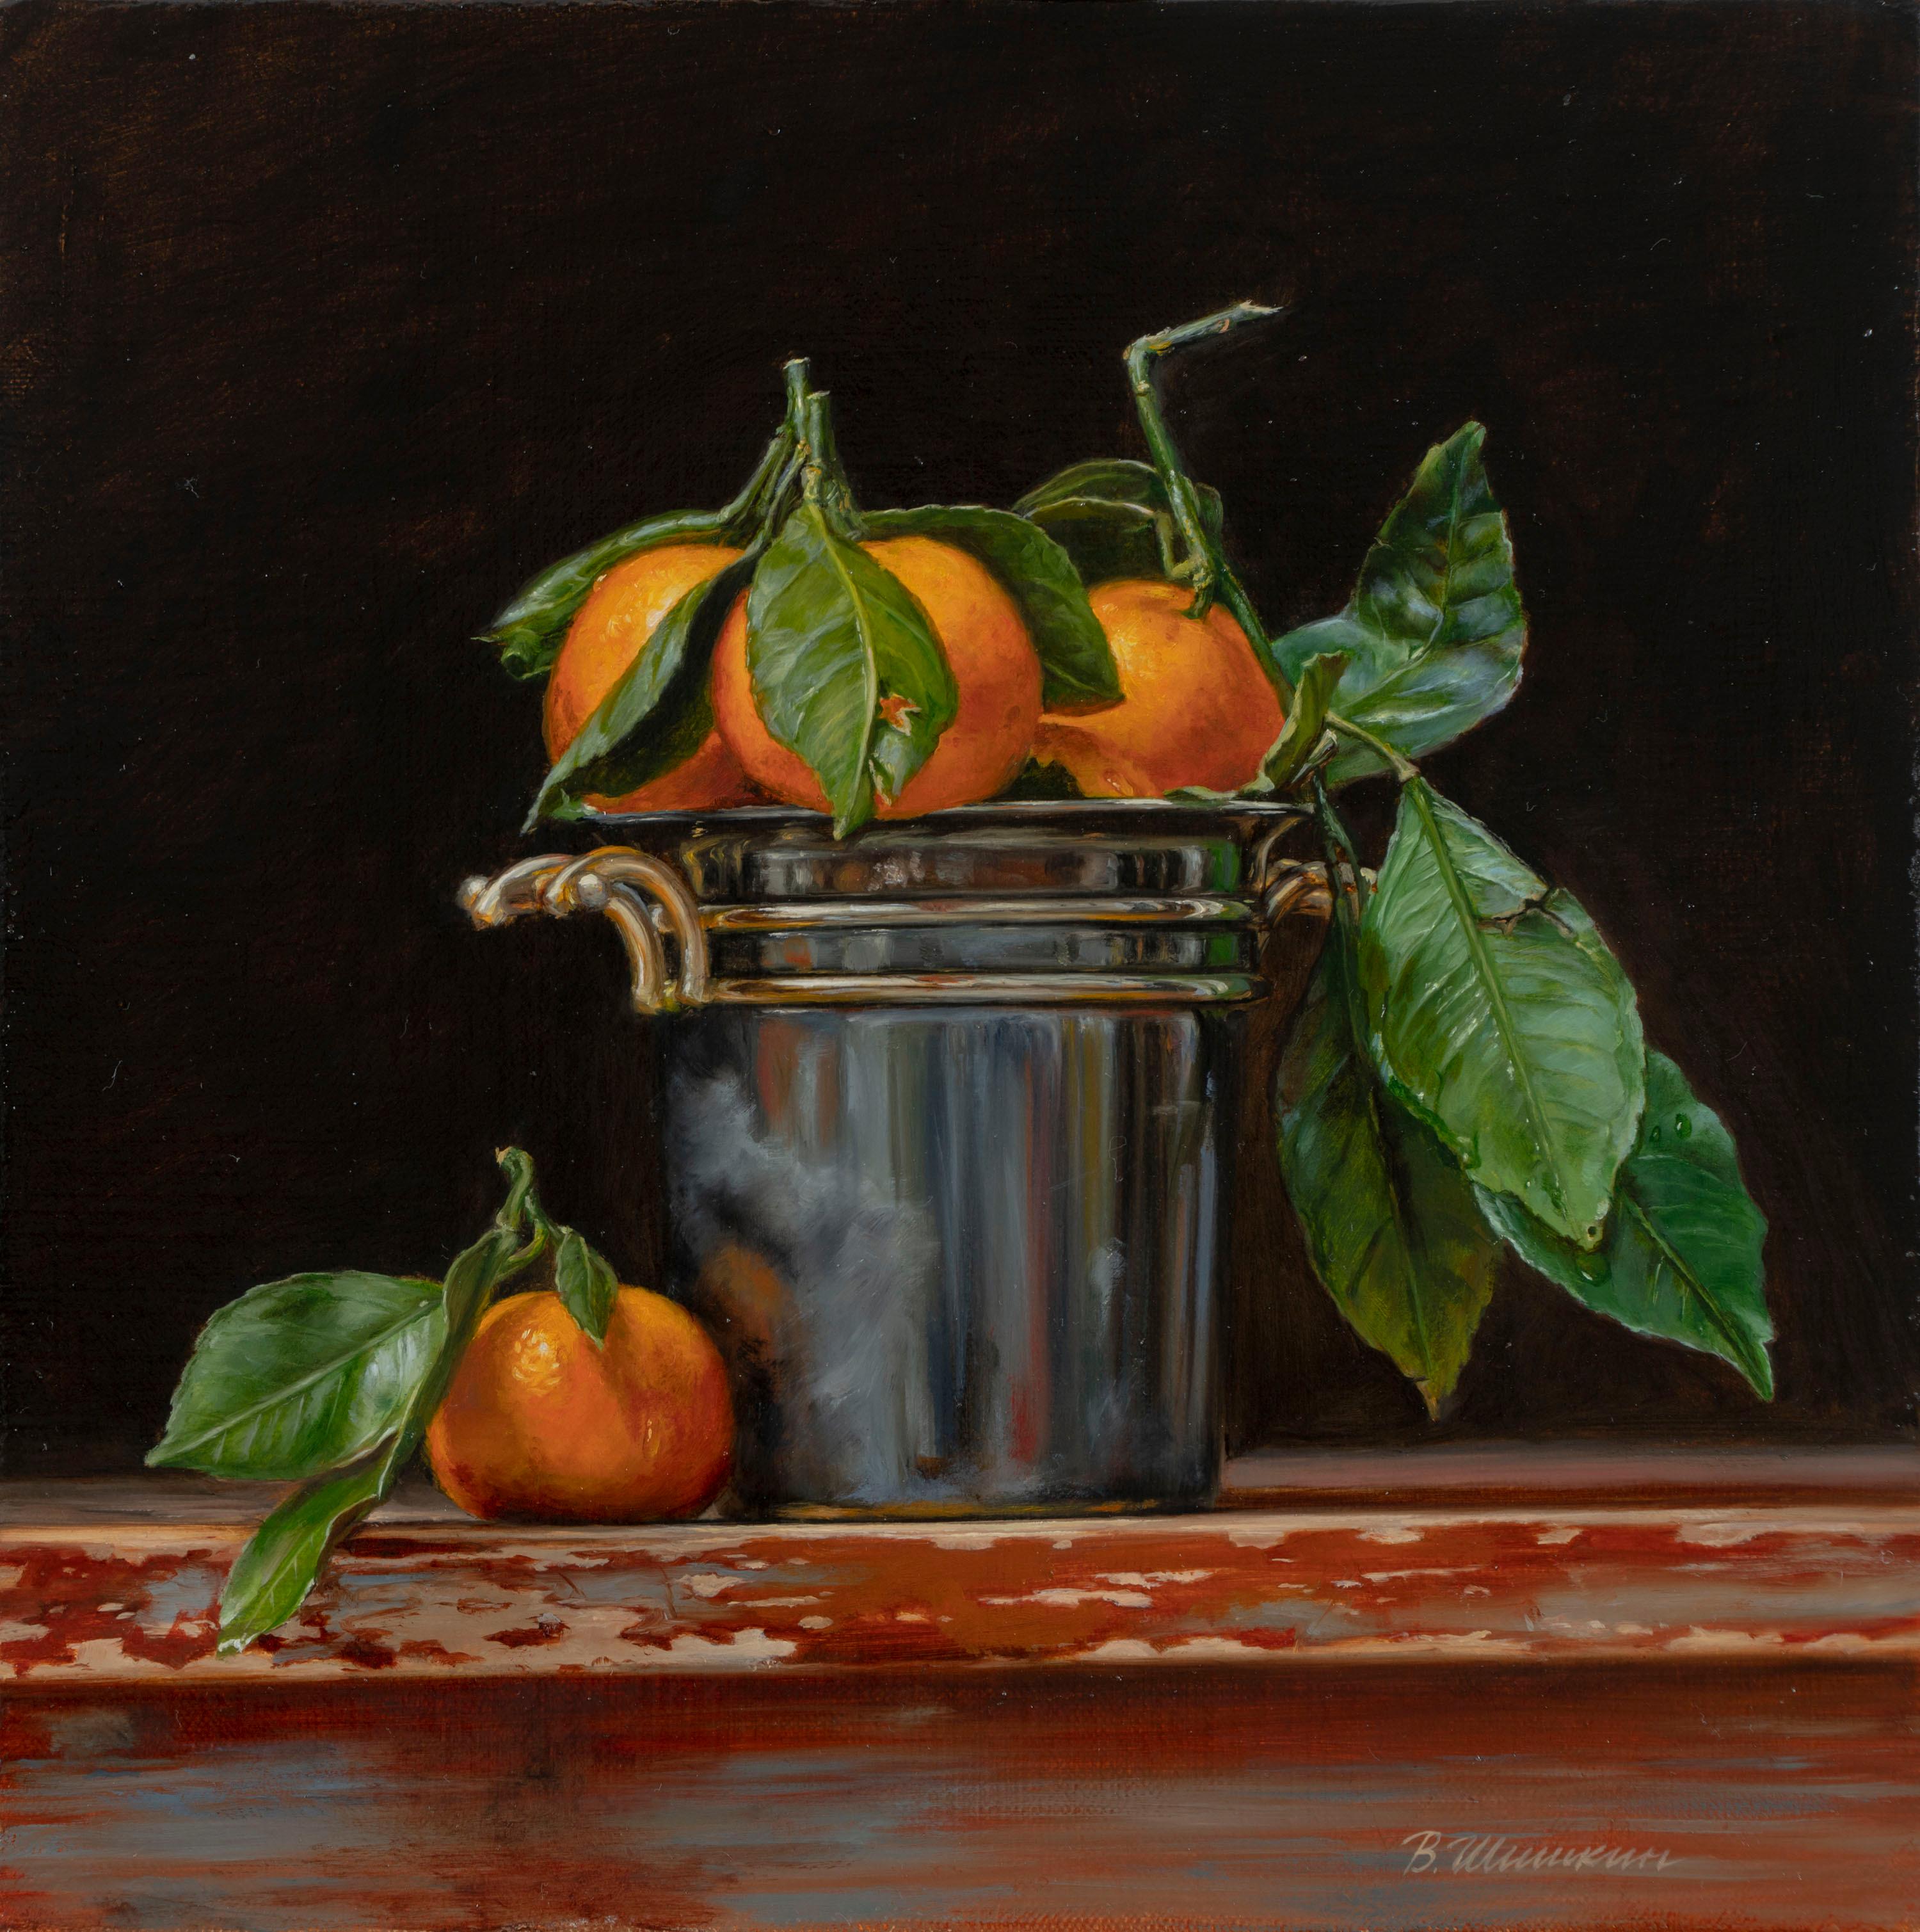 Tangerines in a bucket